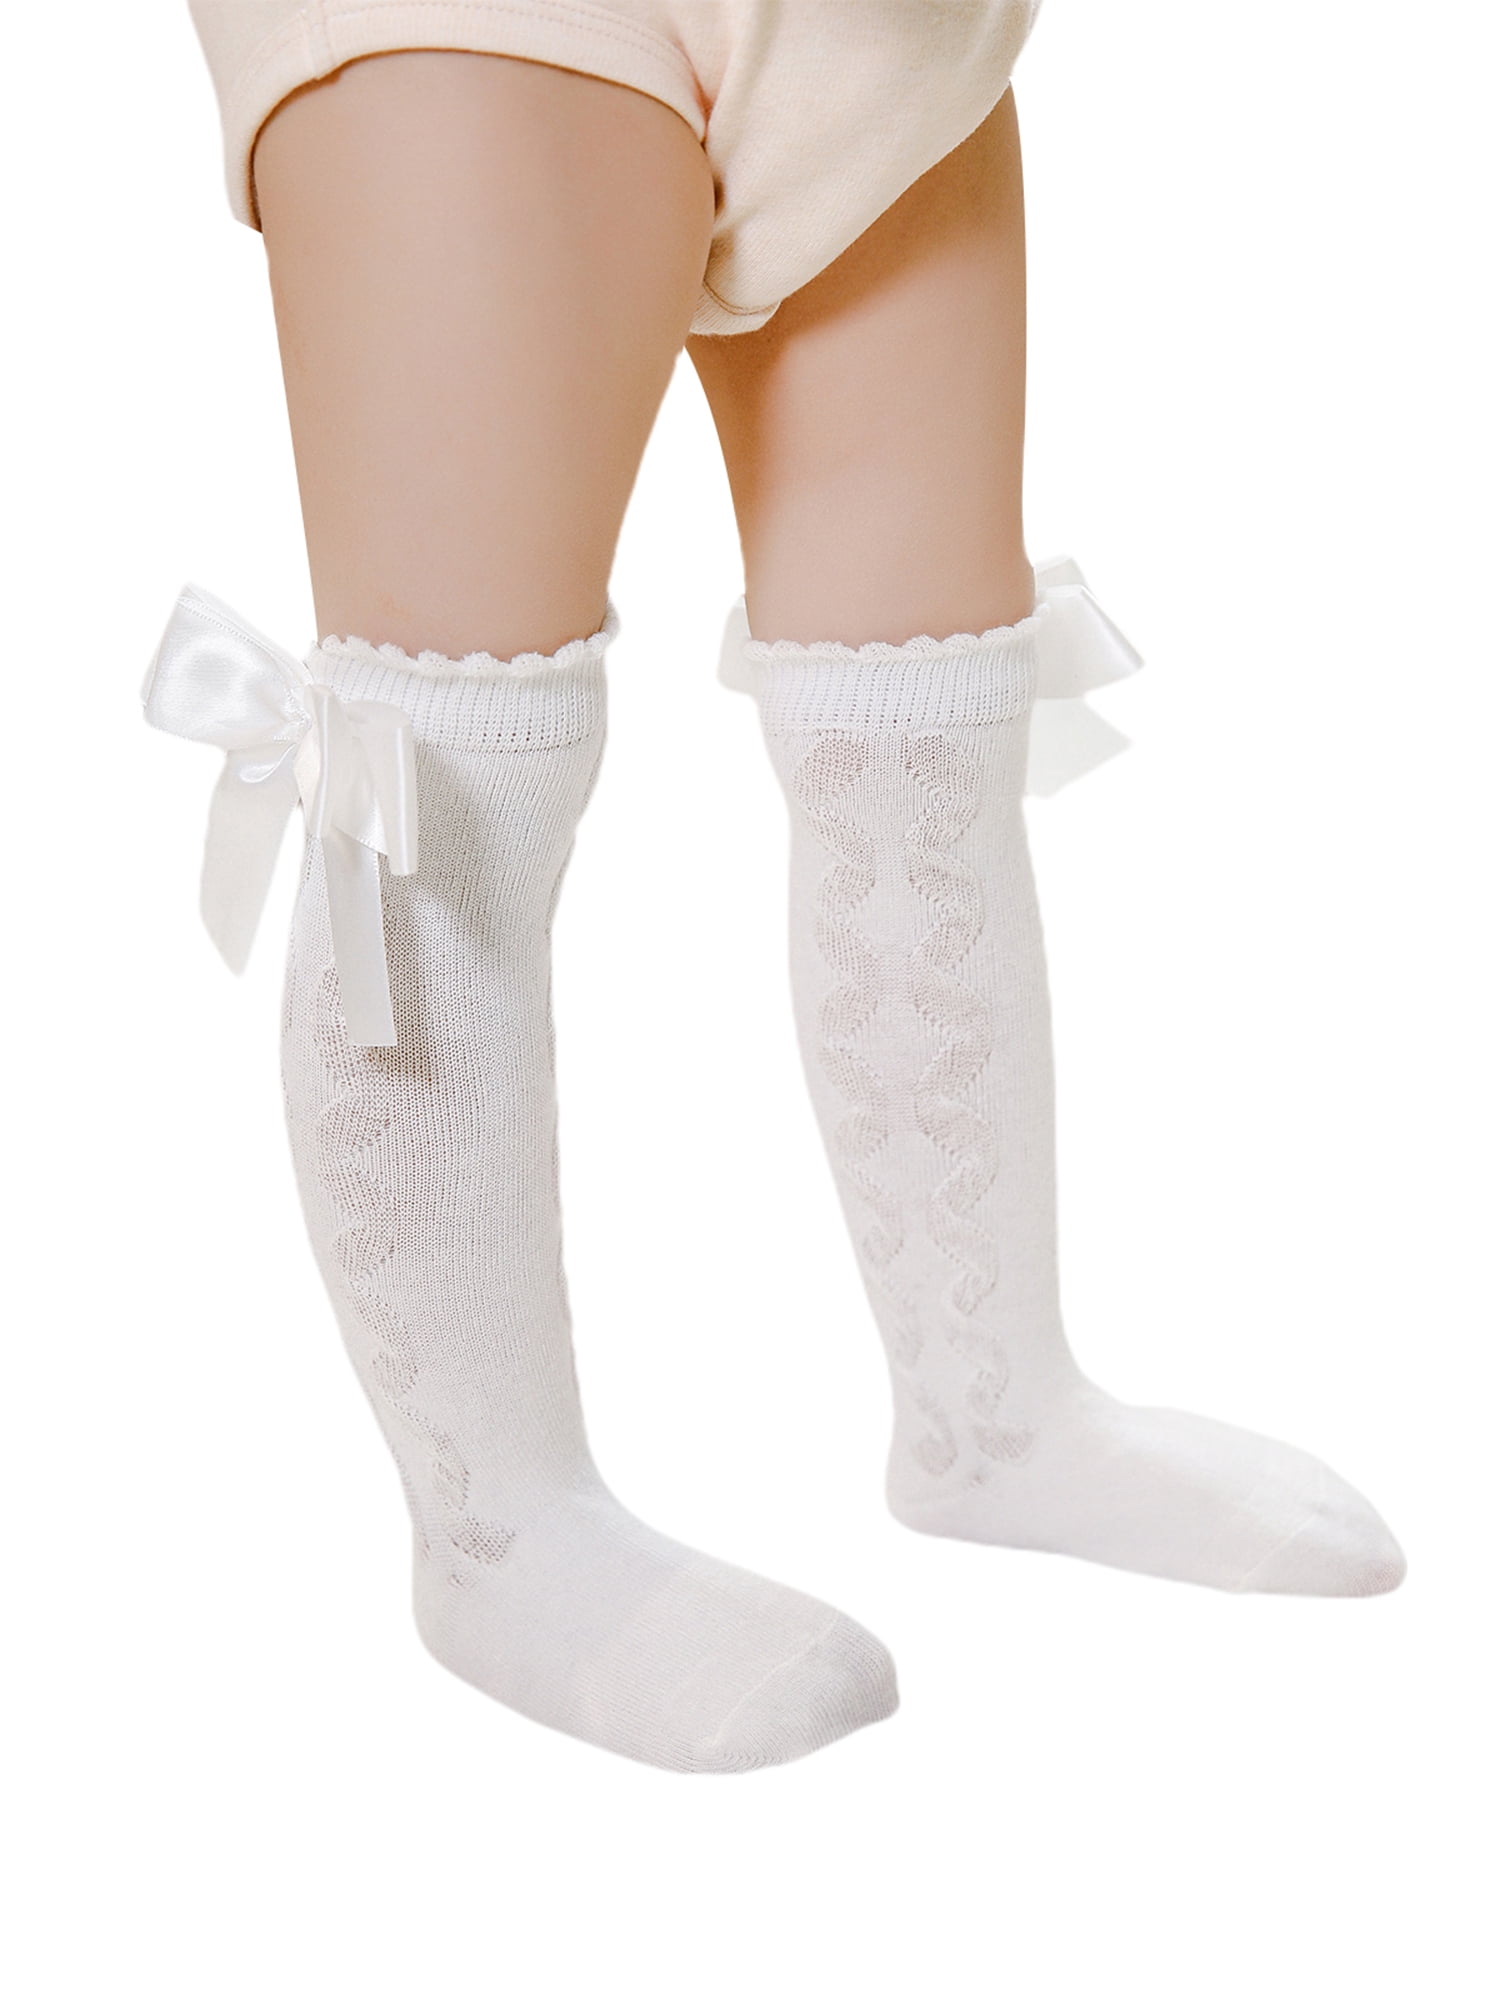 Baby Toddler Girl Knee High Long Socks Soft Cotton Princess Bow Tights Stockings 